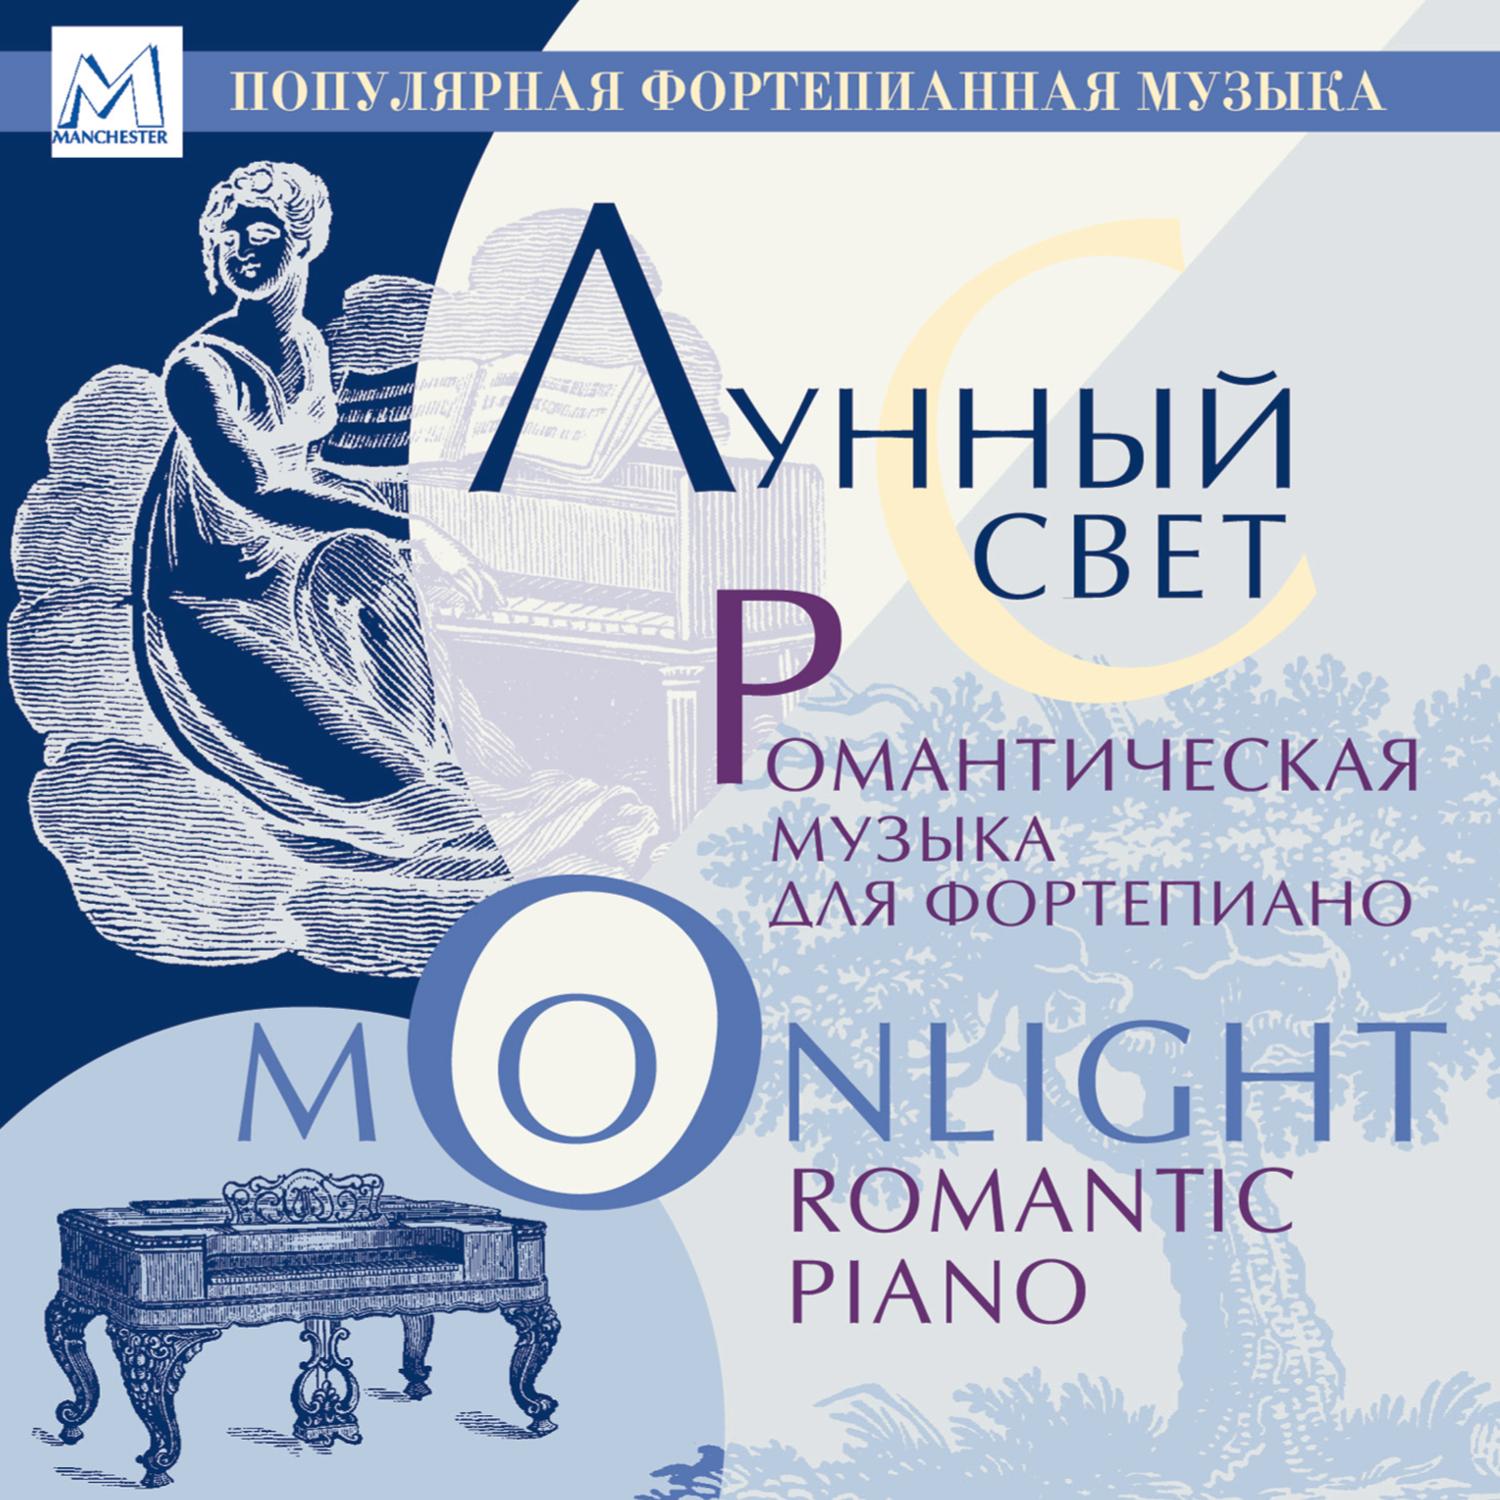 Moonlight. Romantic Piano